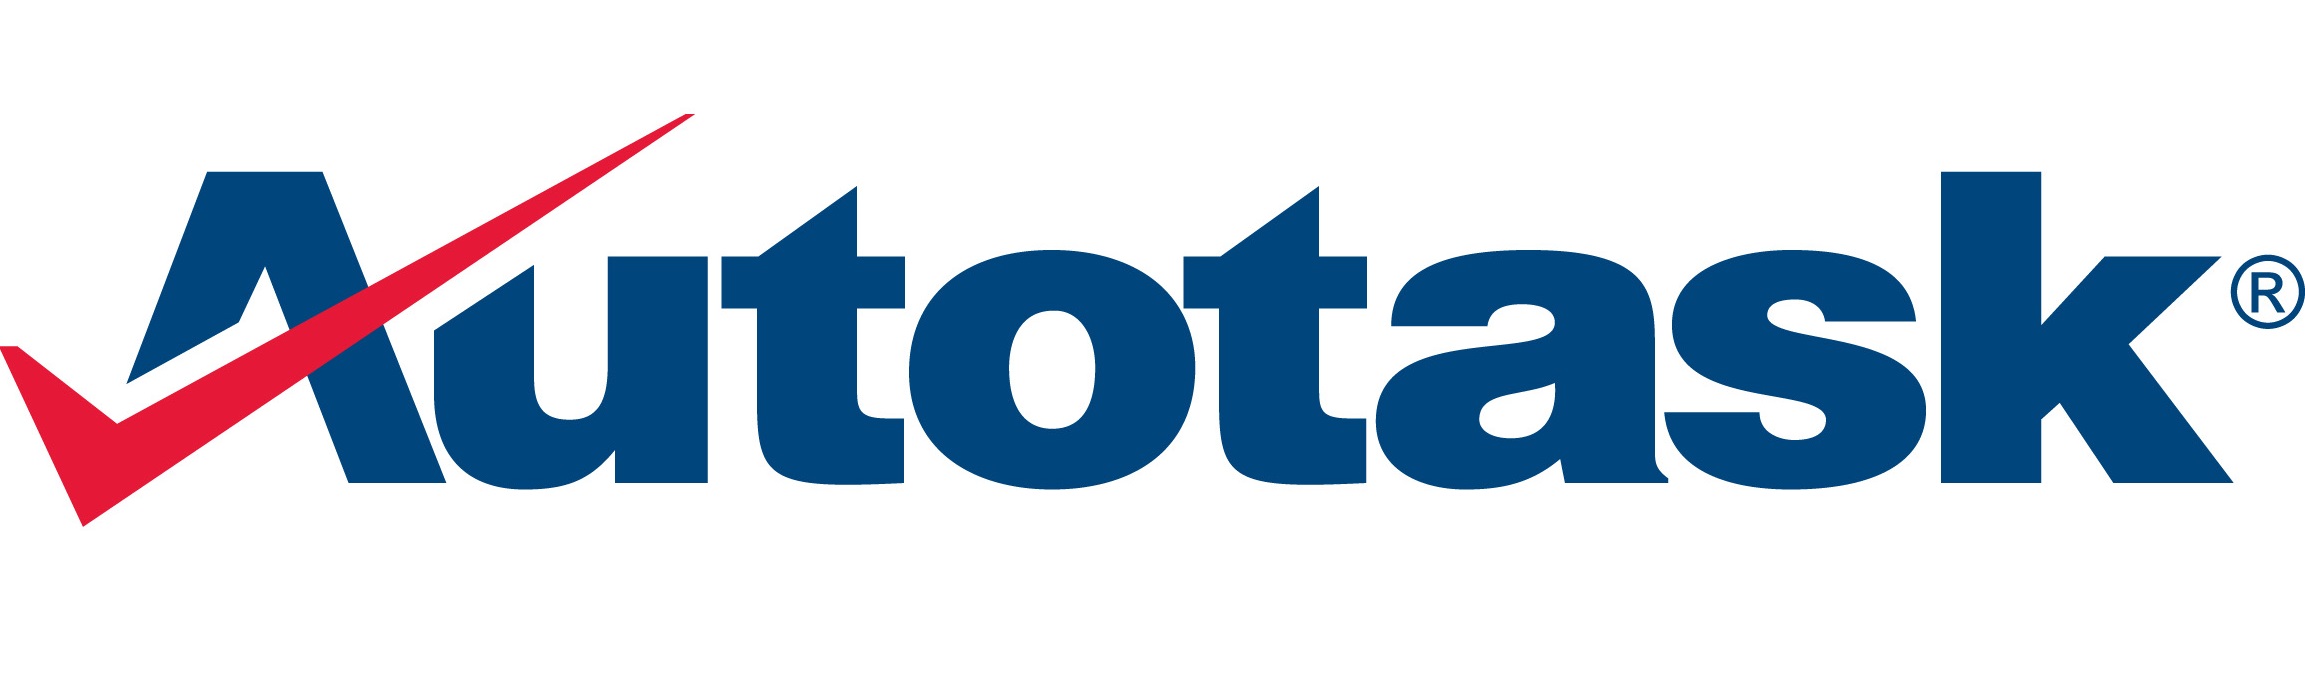 Autotask Logo